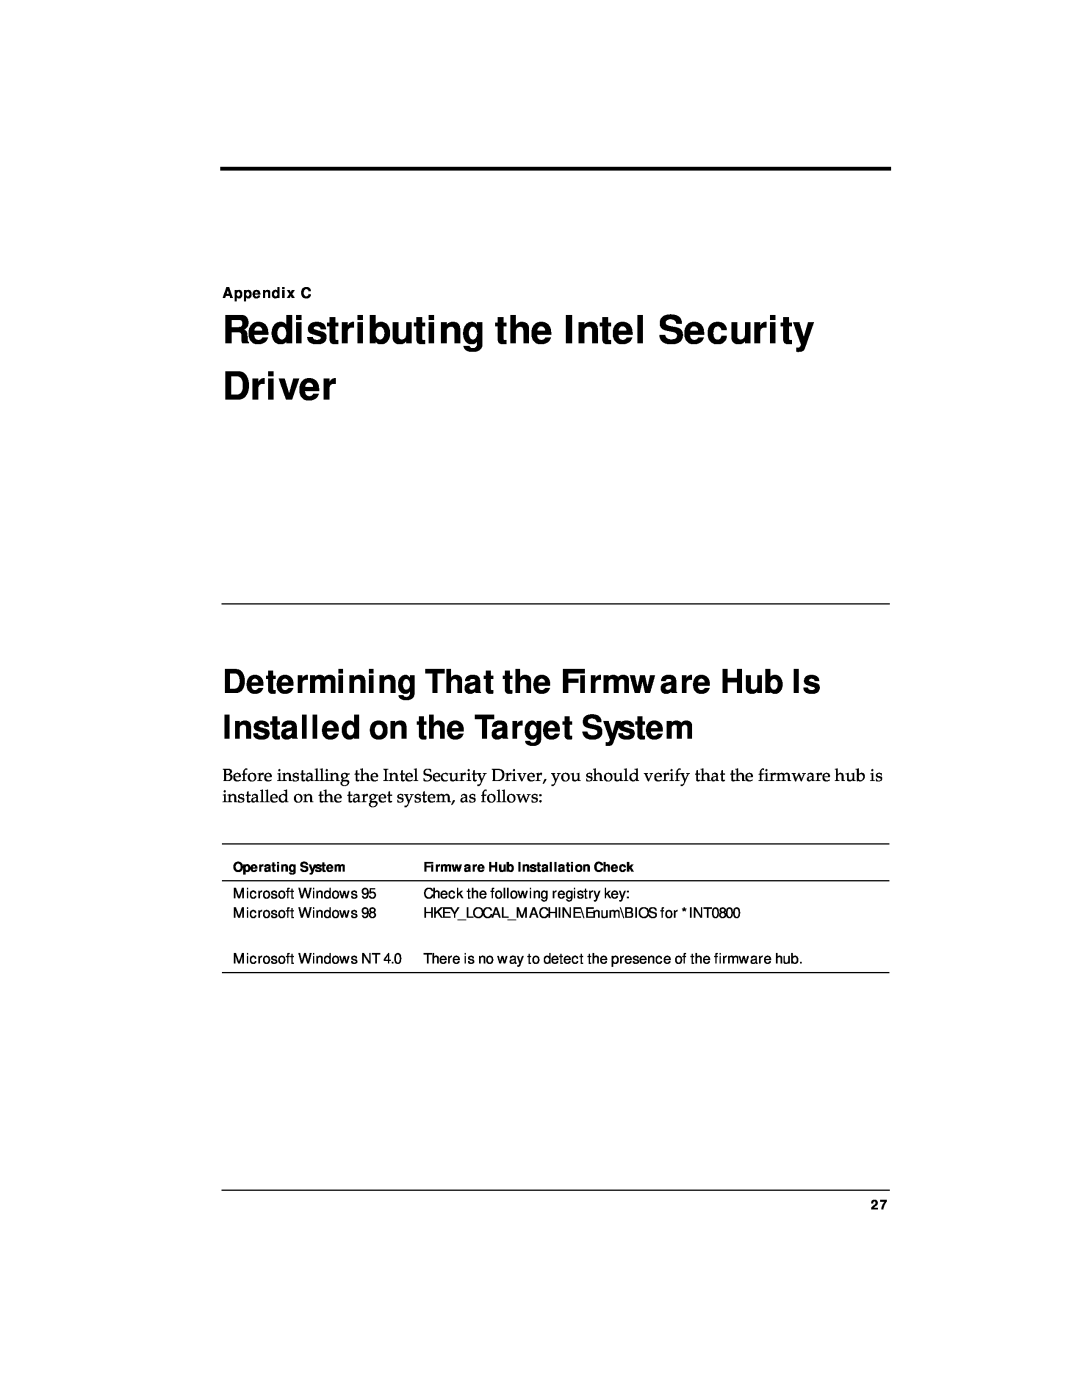 RSA Security 4.3 manual Redistributing the Intel Security Driver, Appendix C 